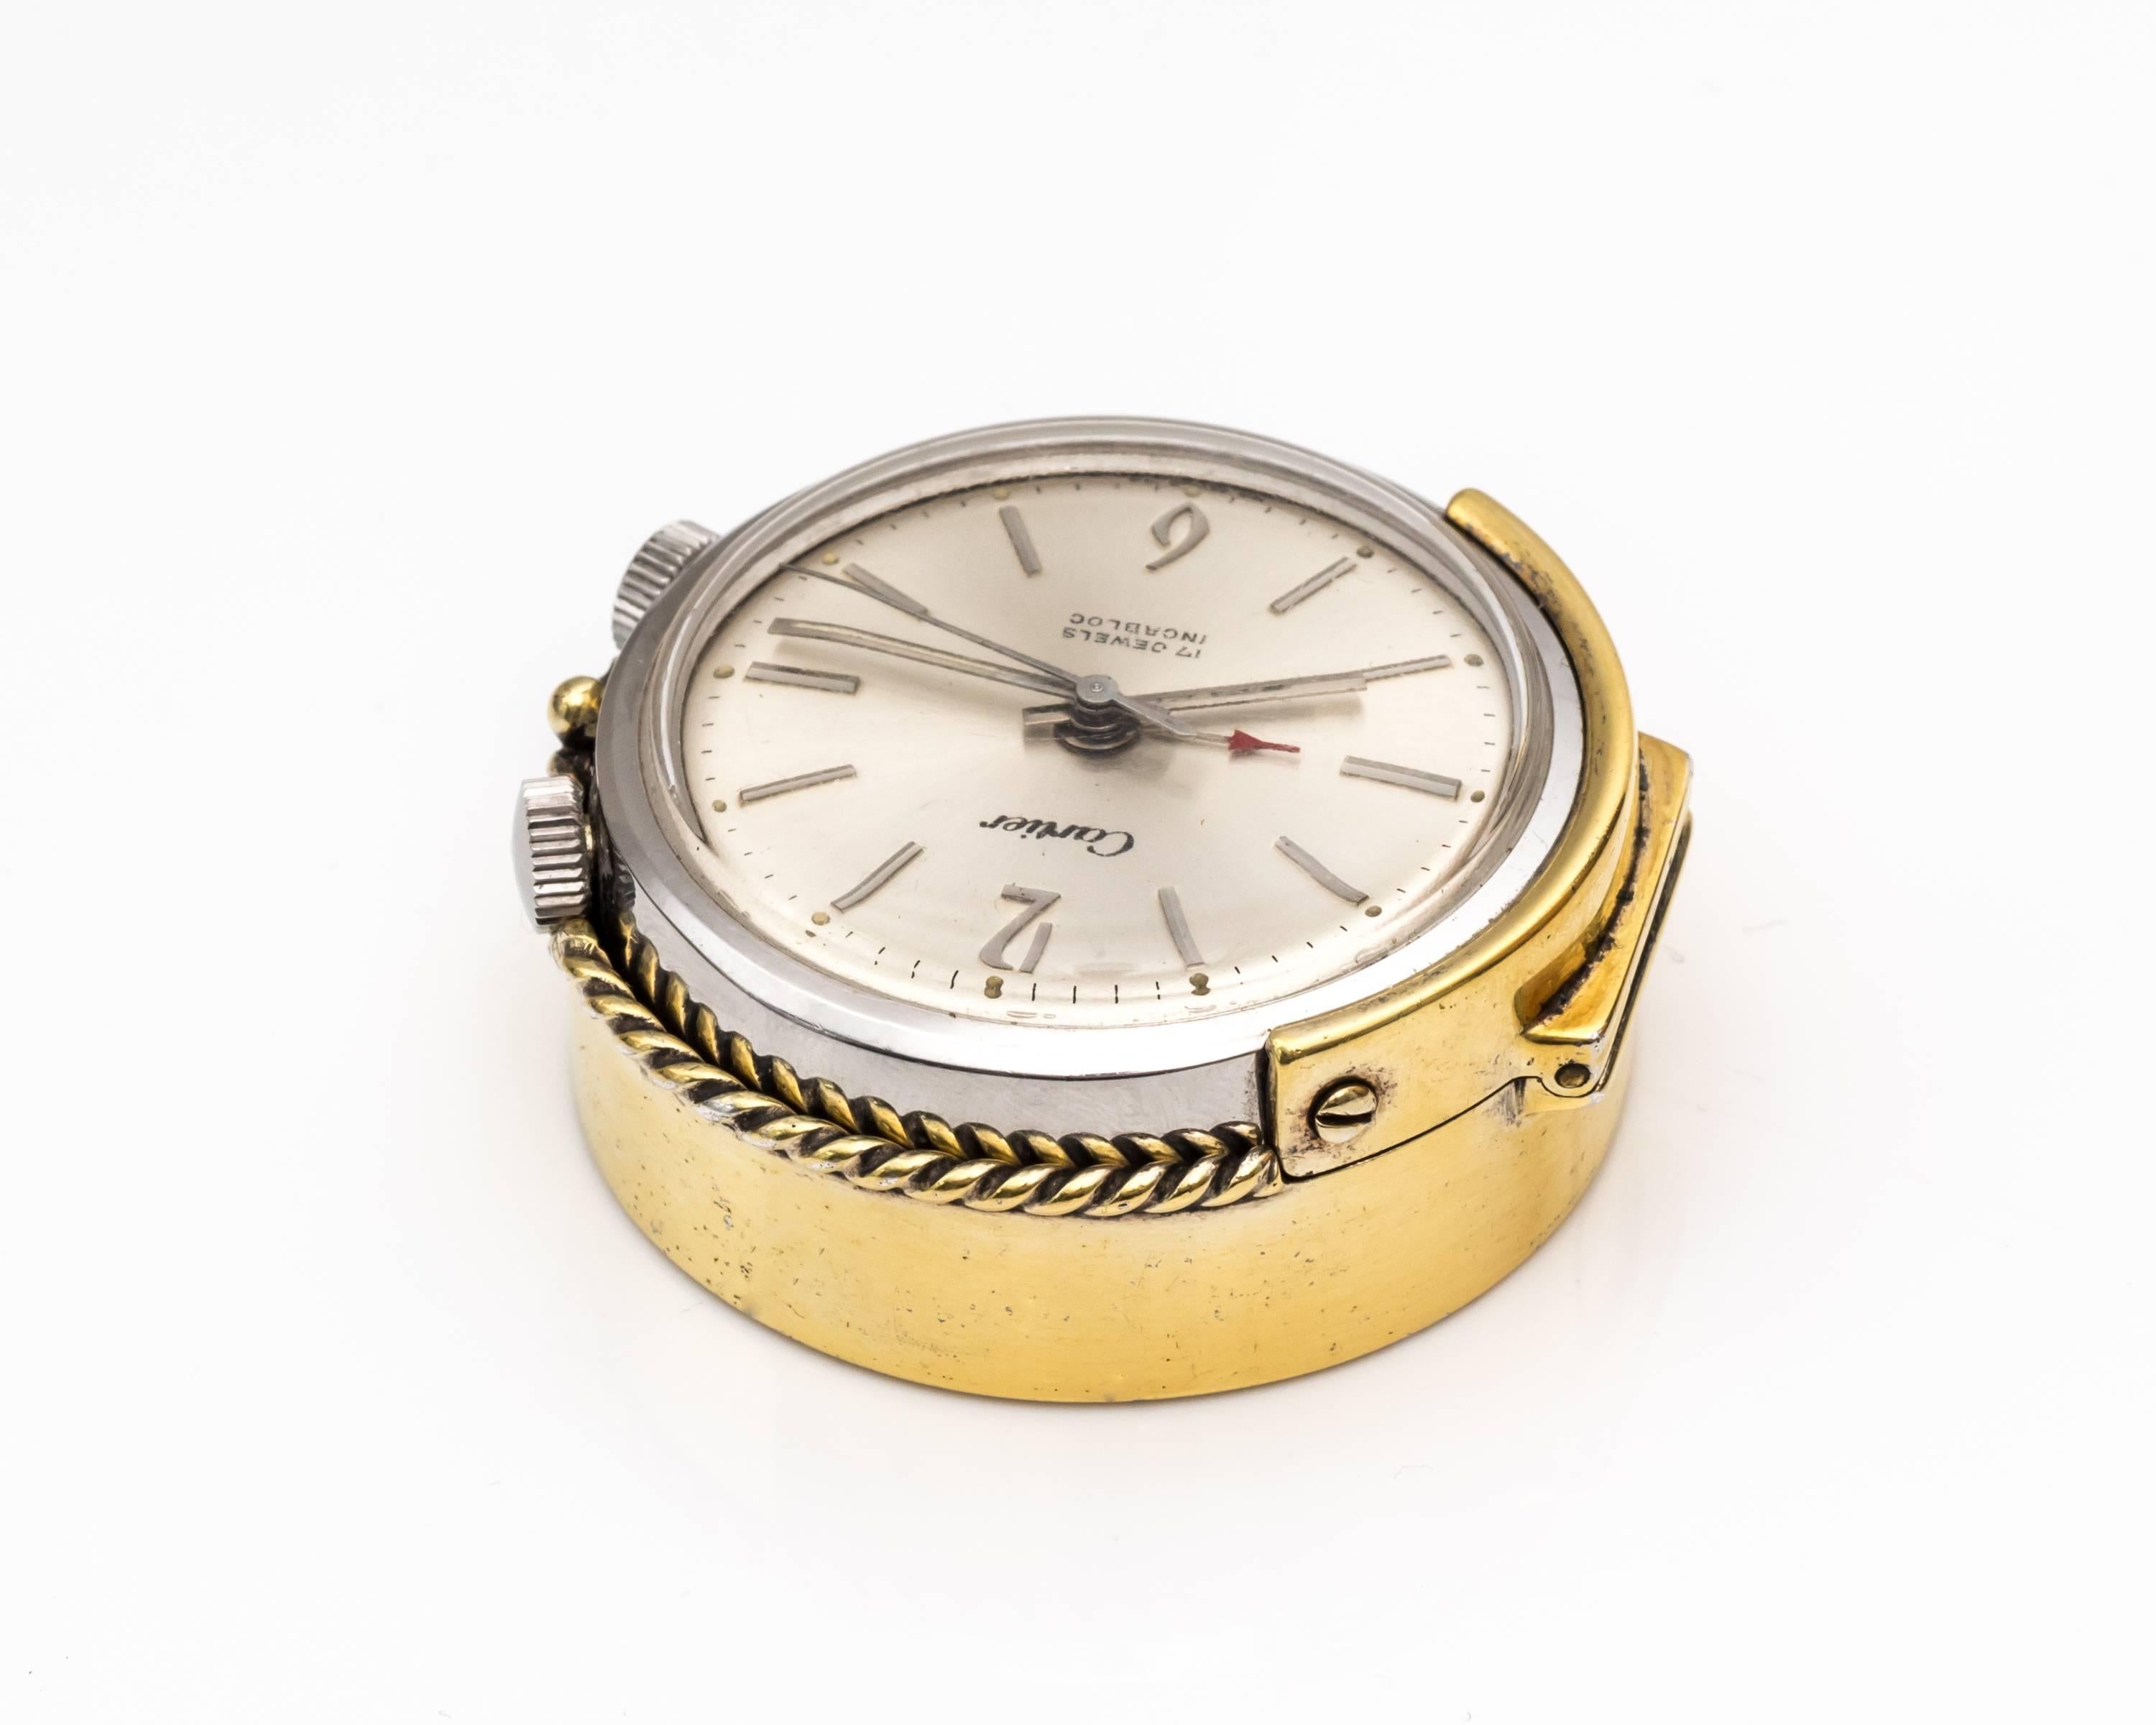 ermex pocket watch